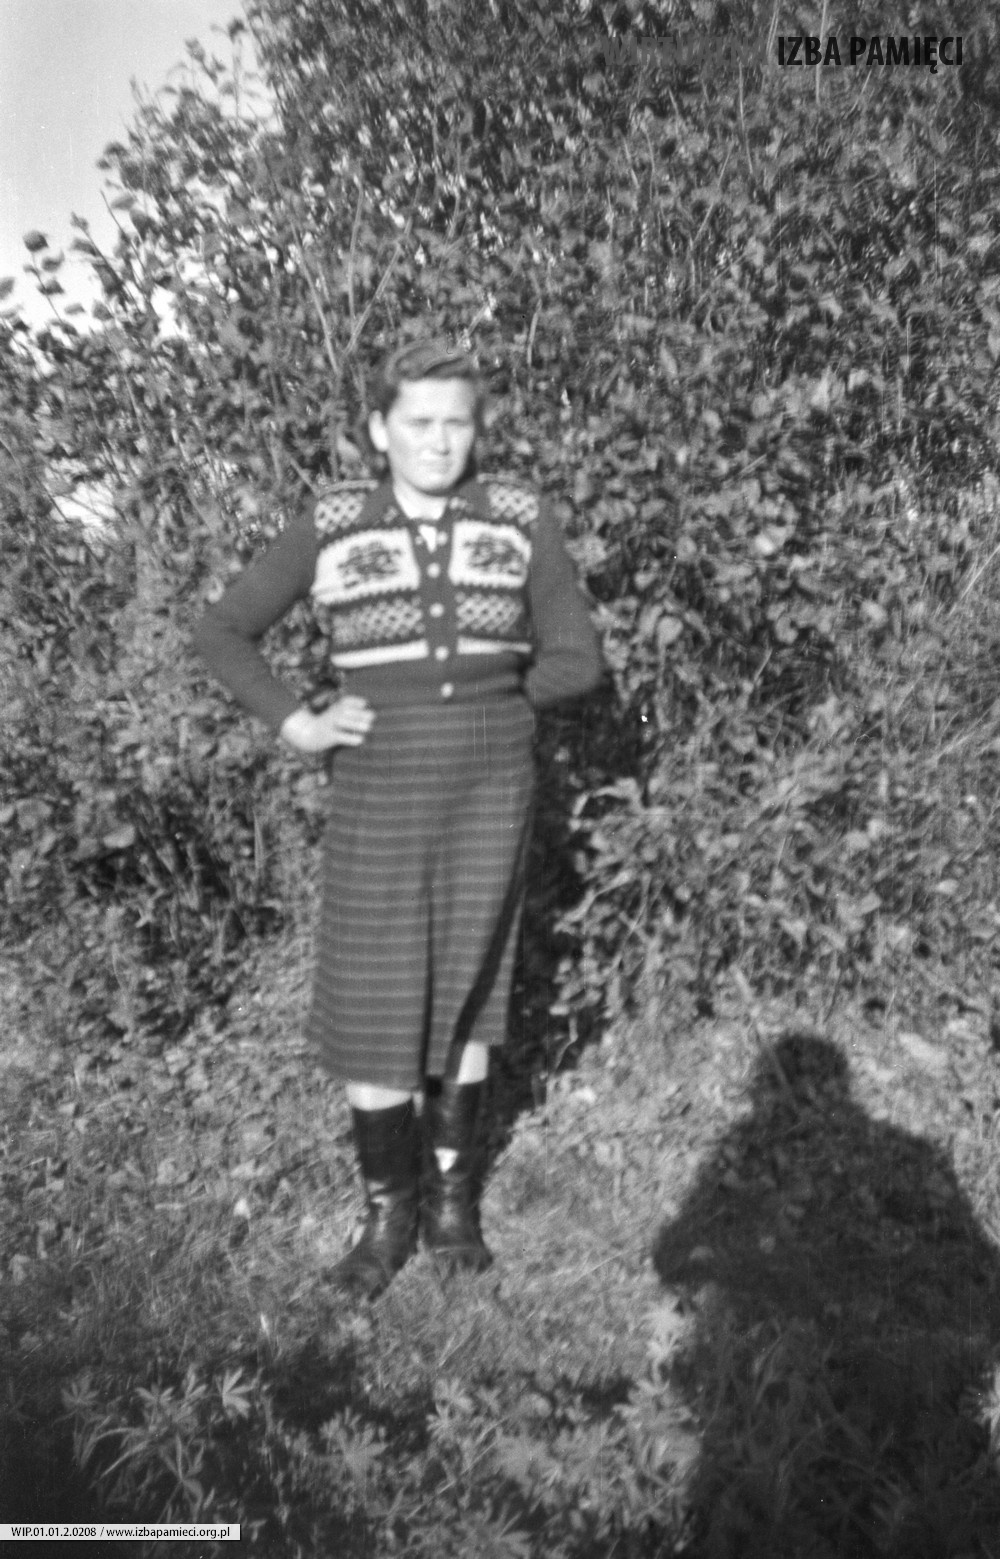 1958. Karolina Zagrobelna na tle zieleni